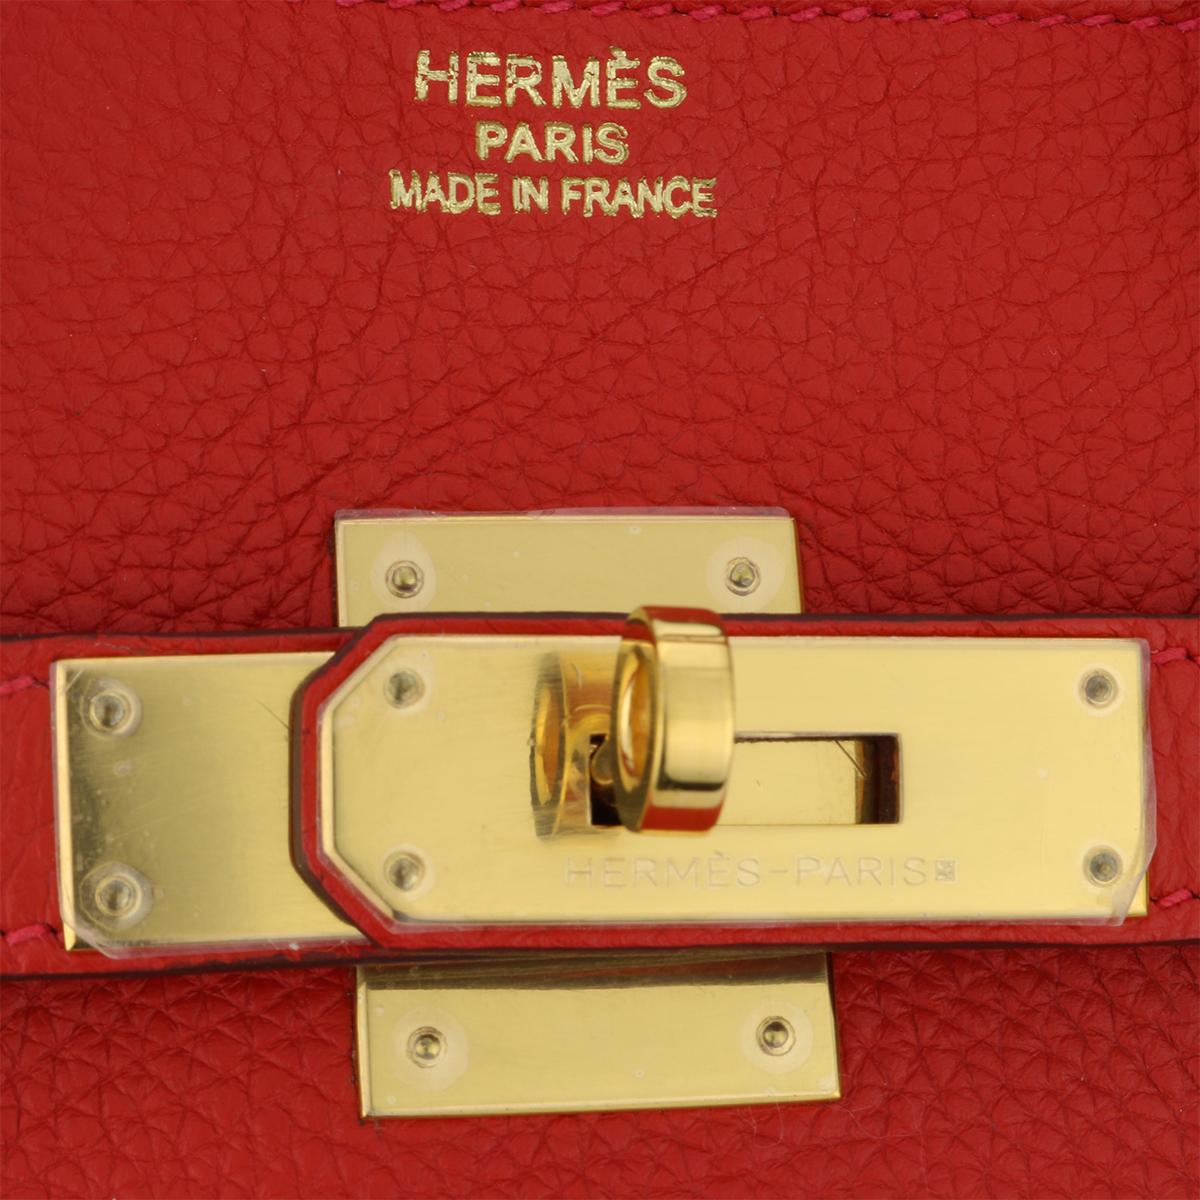 Hermès Birkin 35cm Bag Geranium Togo Leather with Gold Hardware Stamp P 2012 6